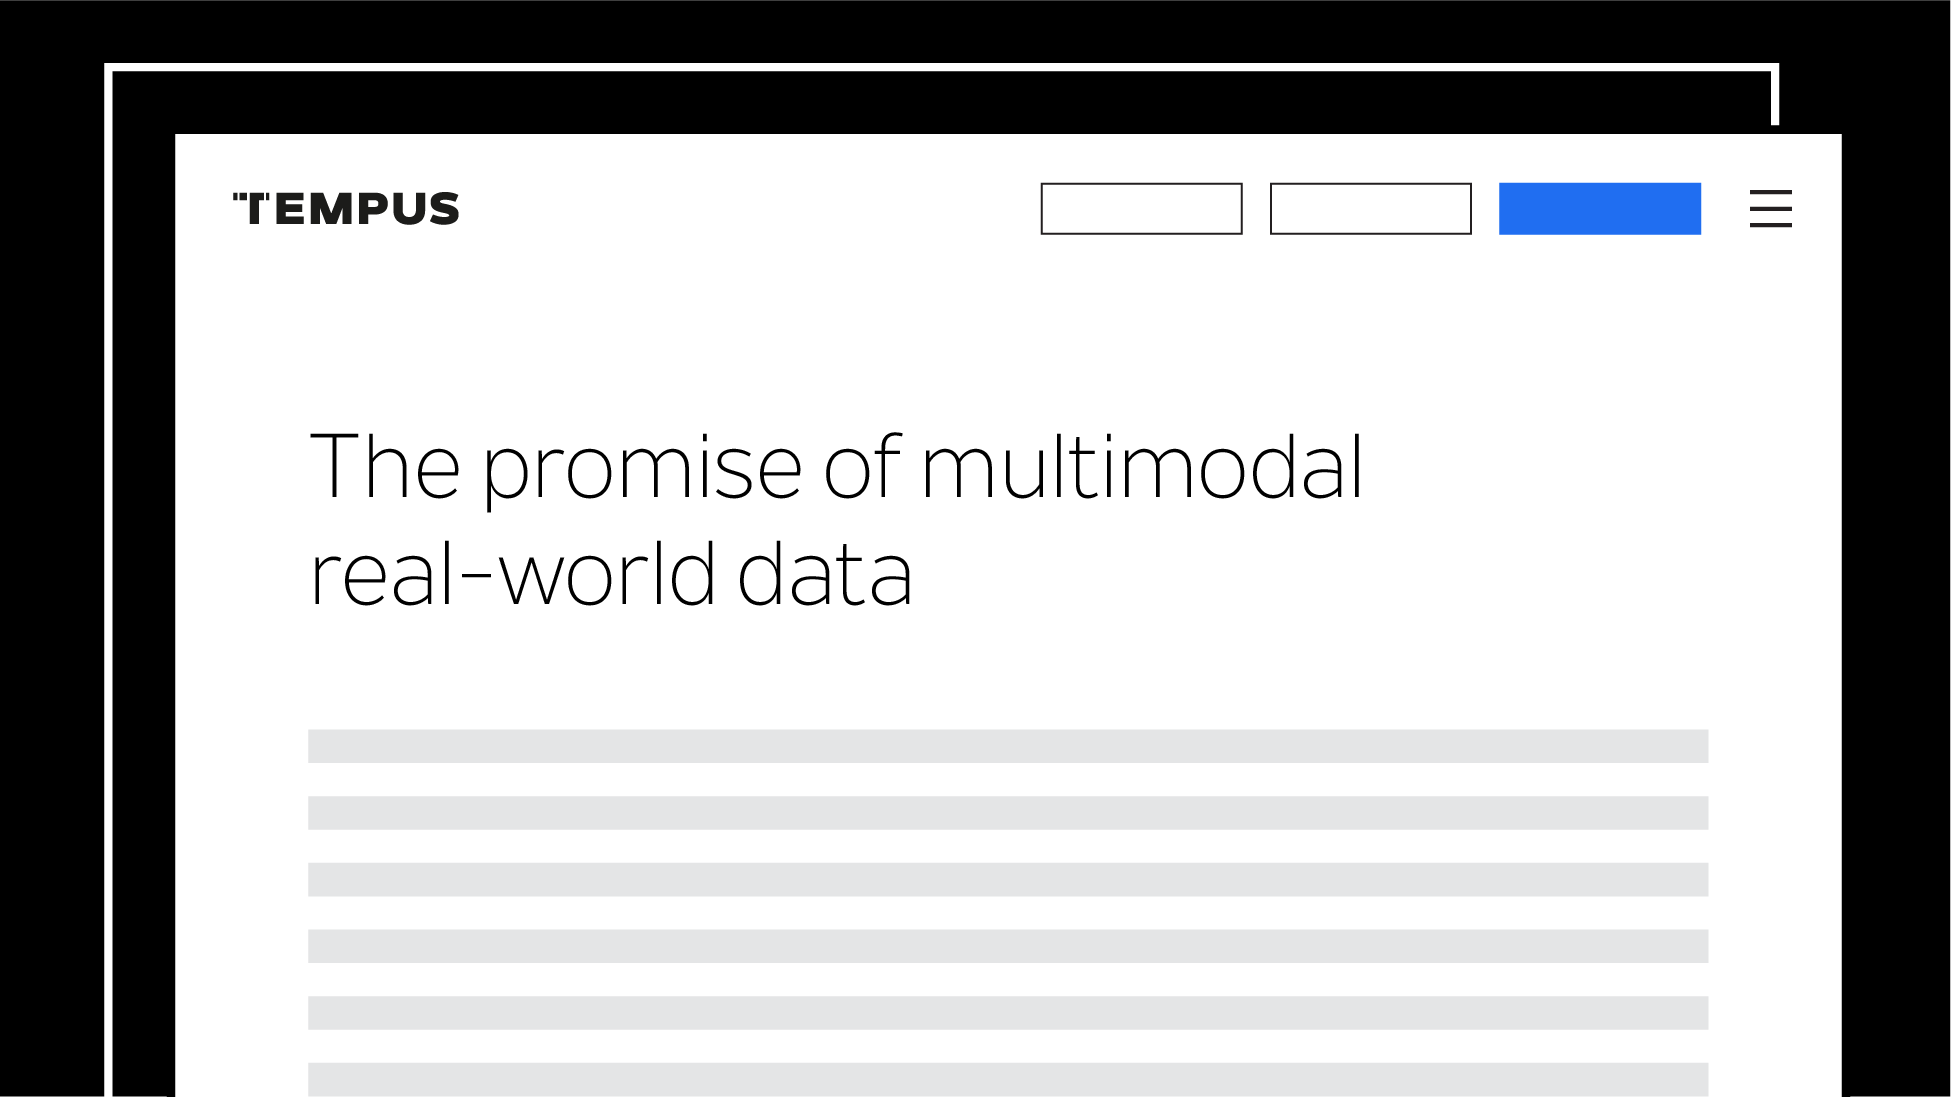 The promise of multimodal real-world data